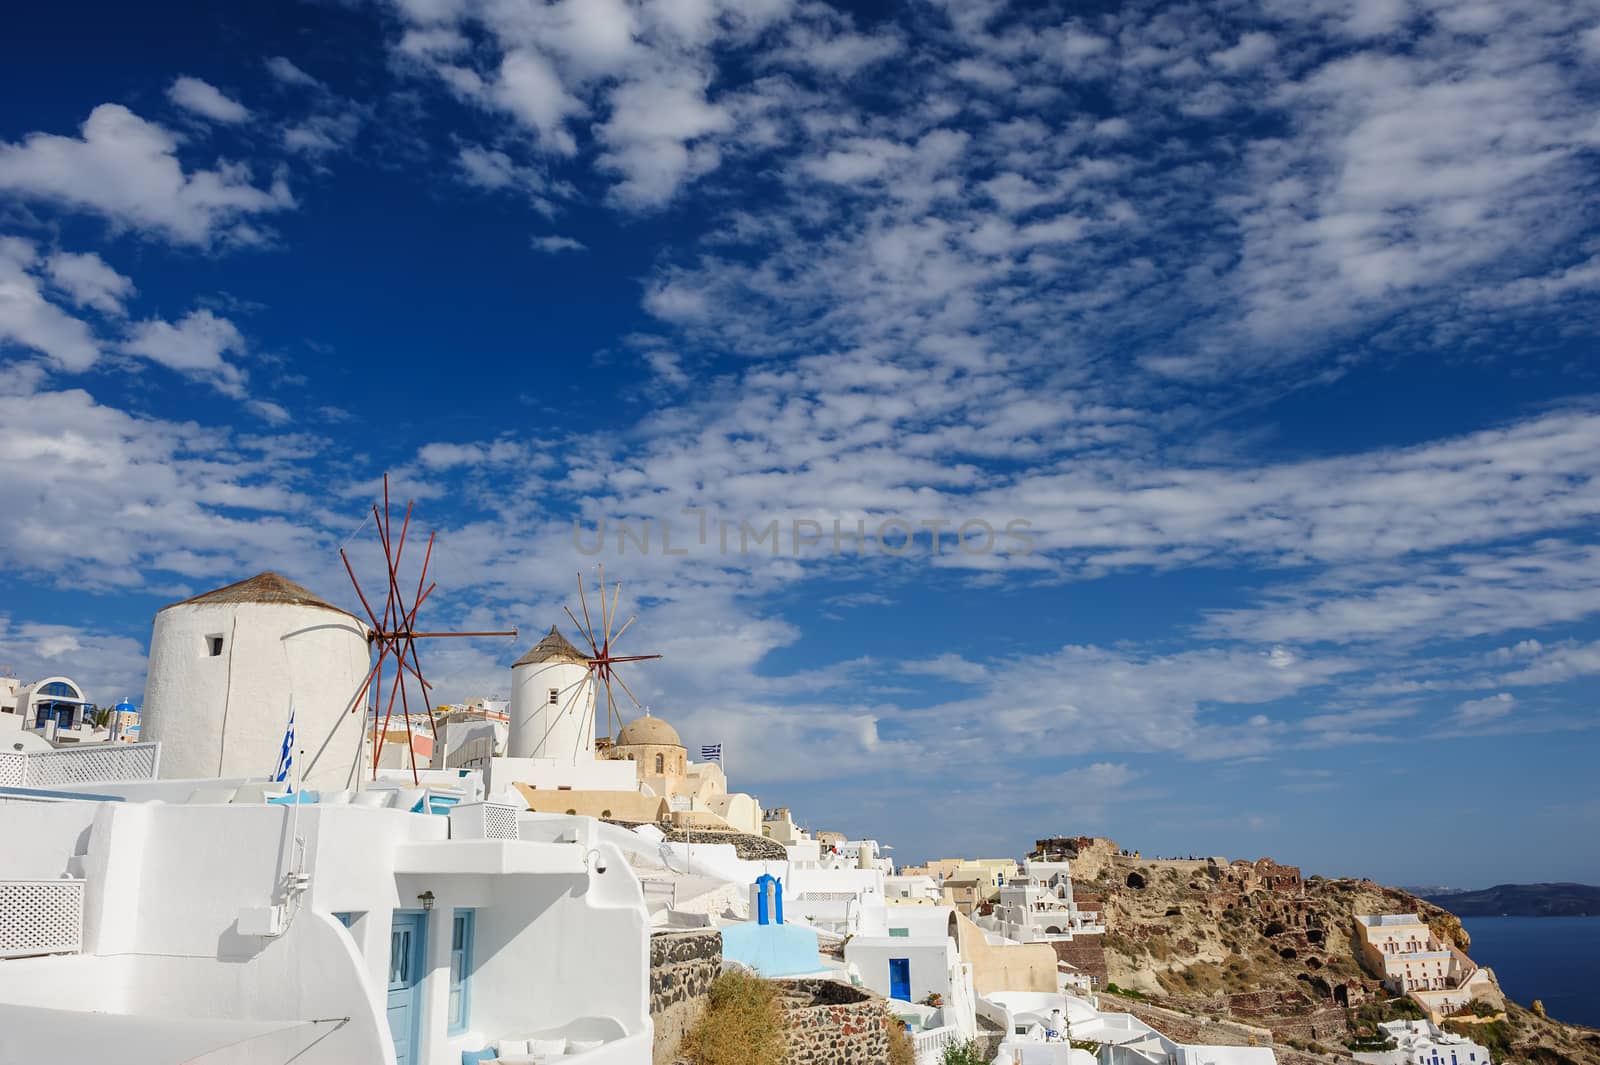 Windwill of Oia Santorini, Greece, copyspace by starush